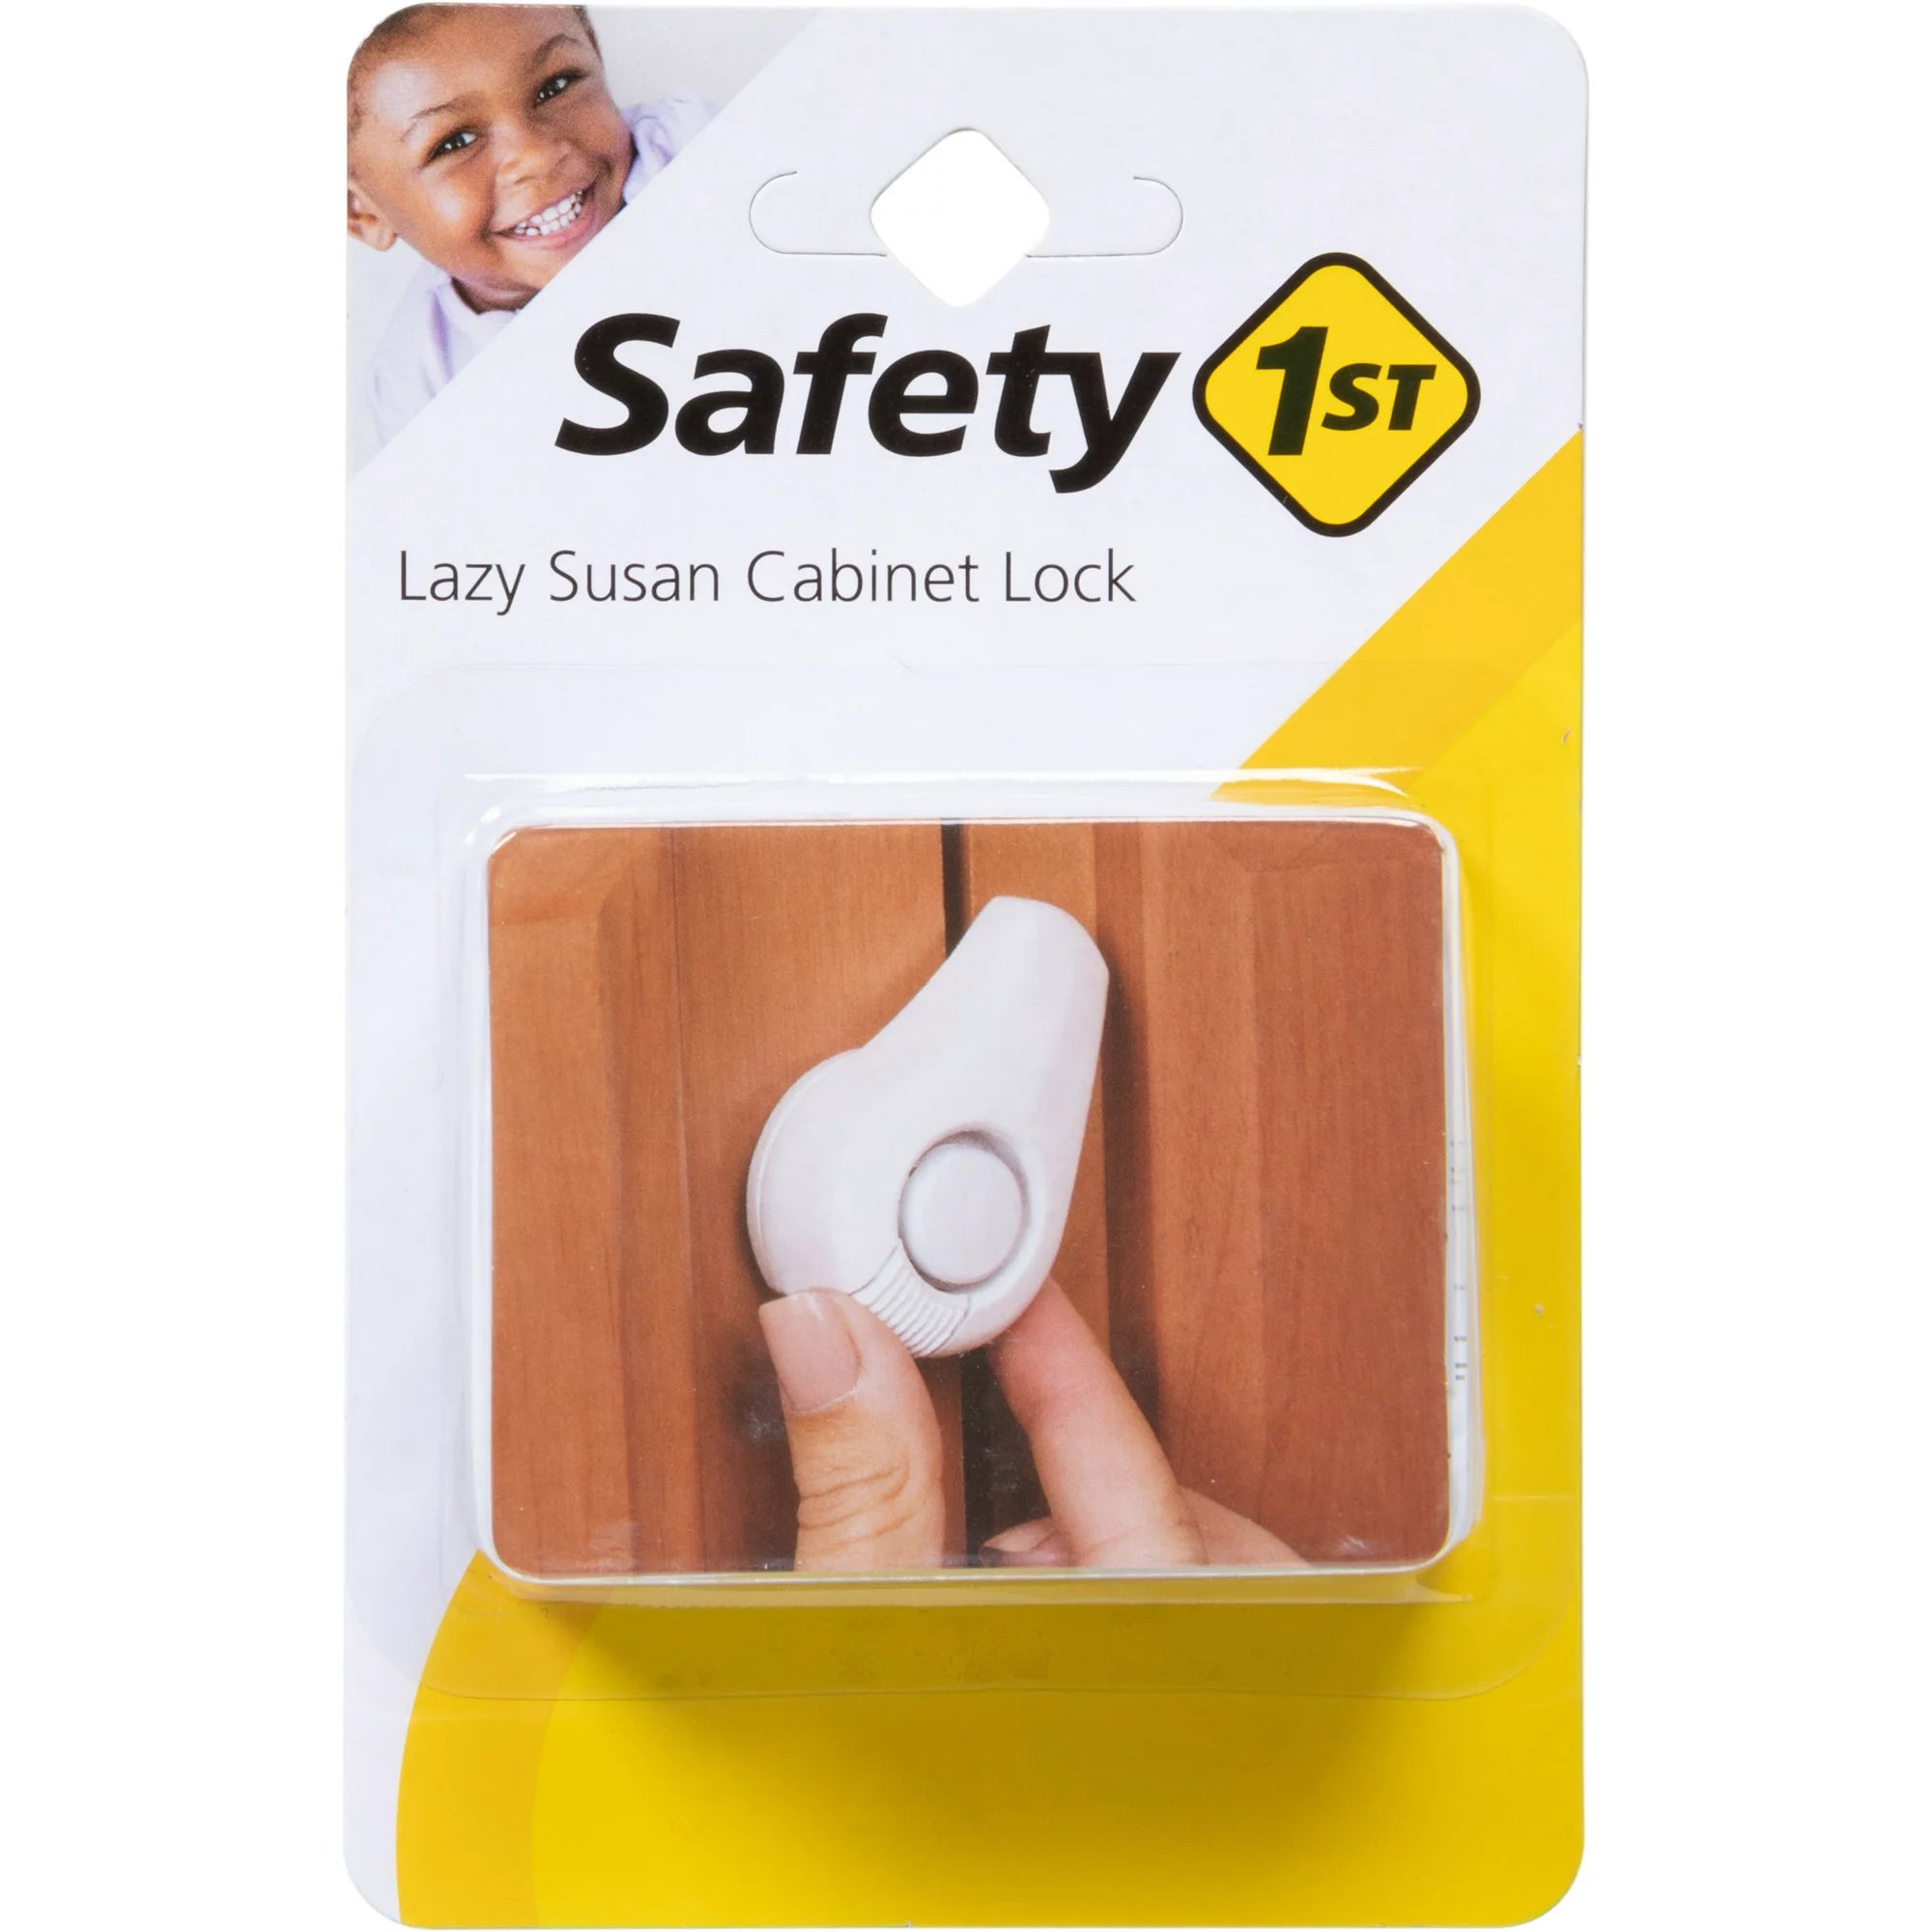 Safety 1st Lazy Susan Cabinet Lock